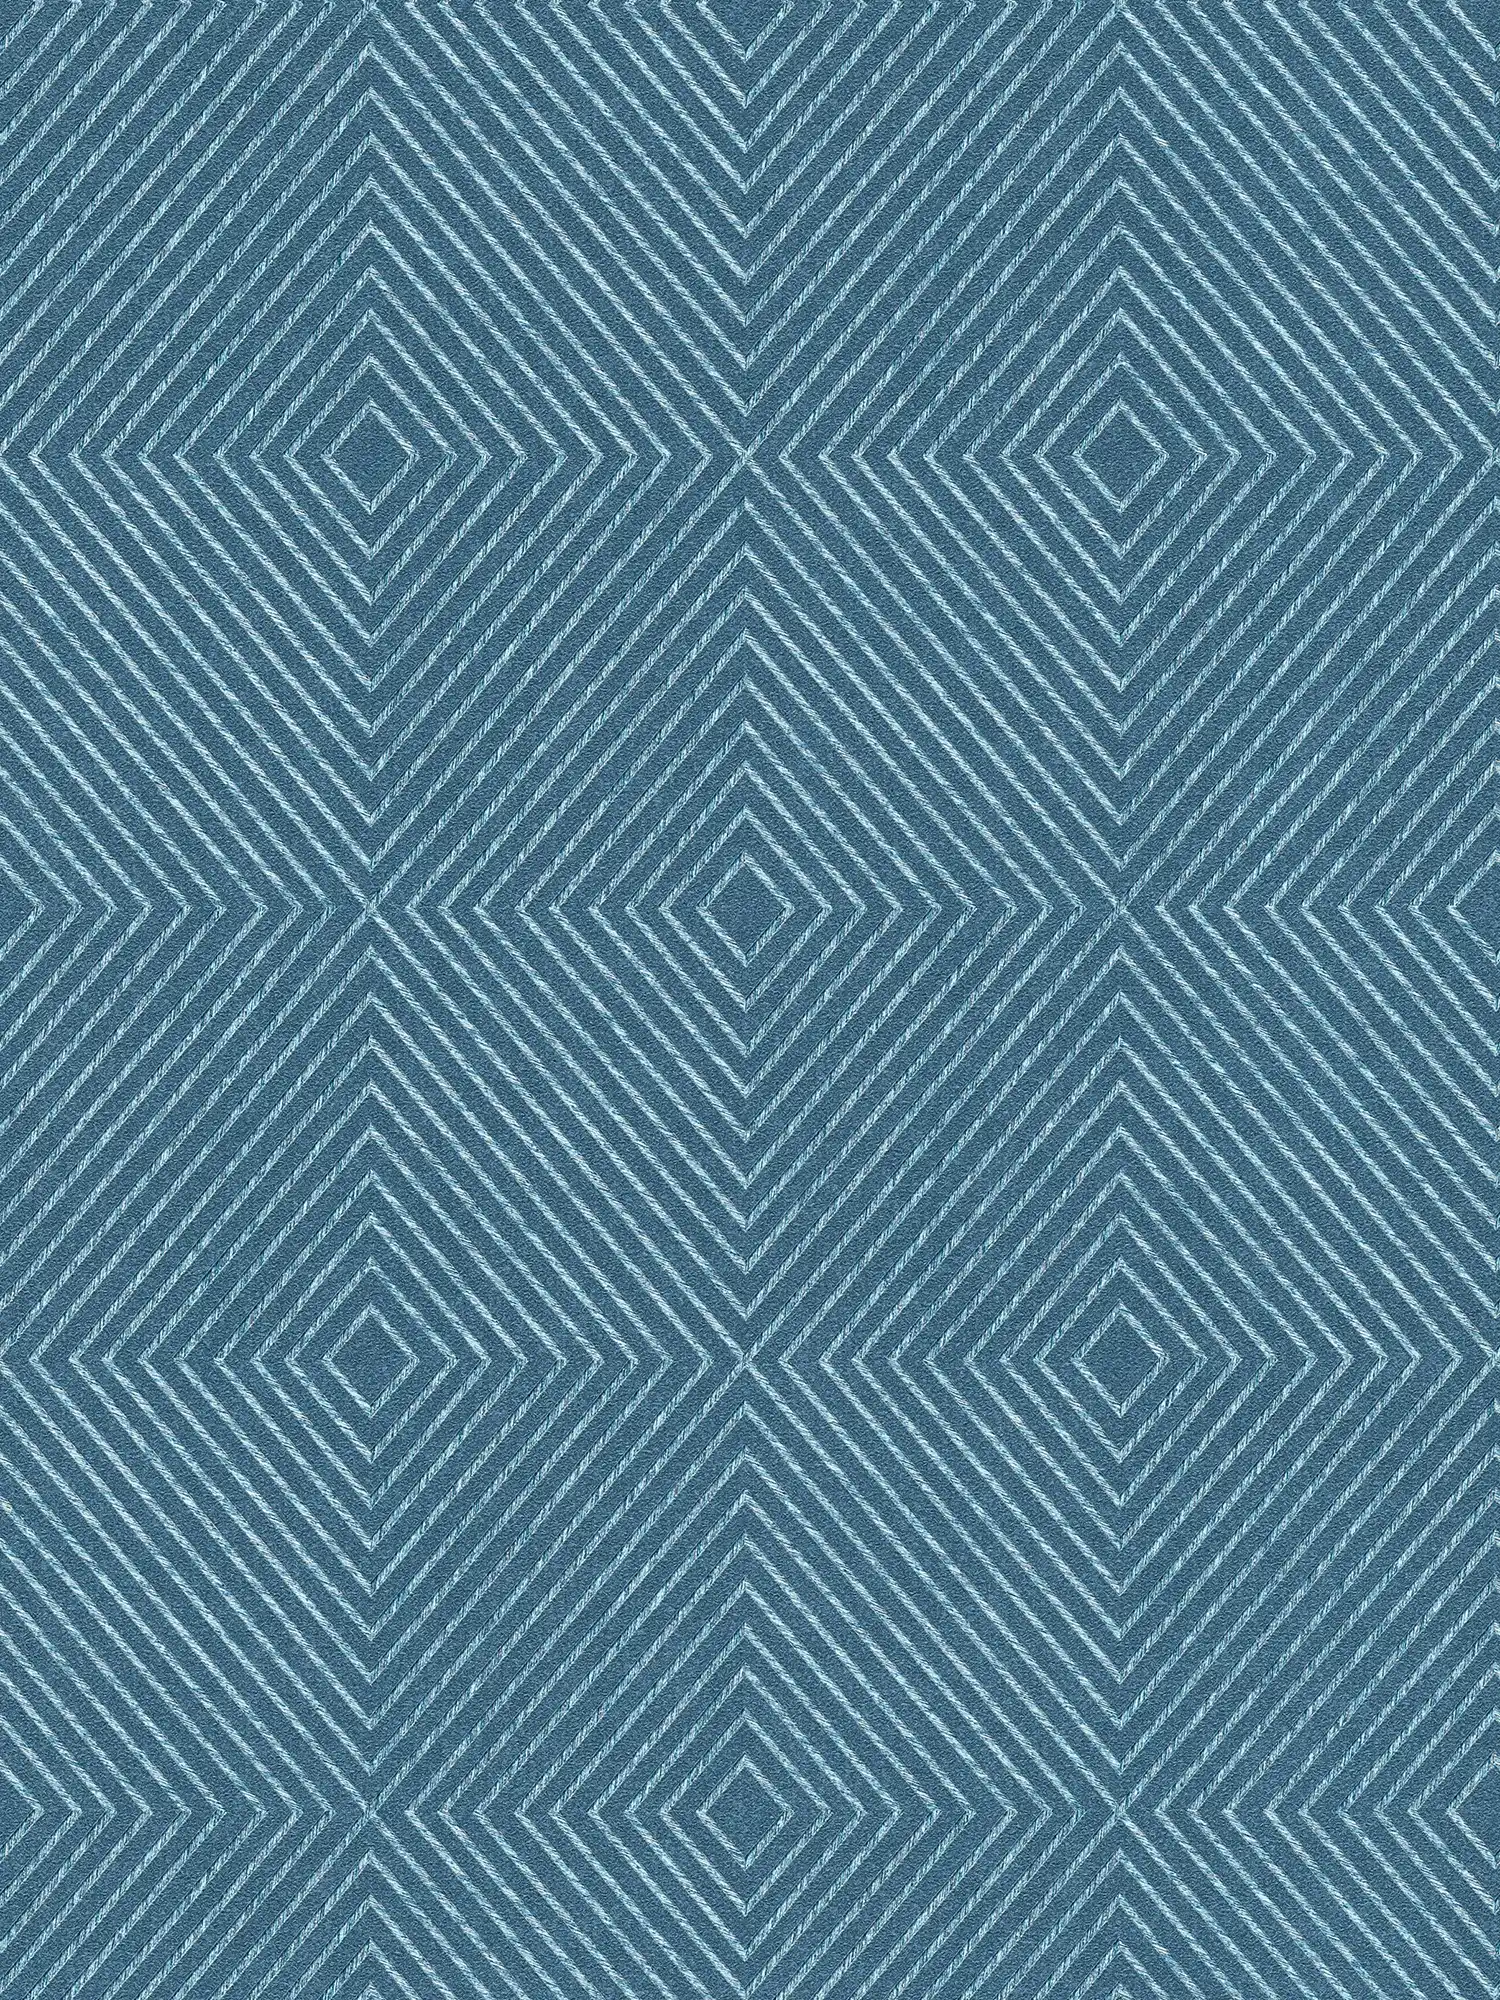 Wallpaper graphic design, Scandinavian style - blue, silver
